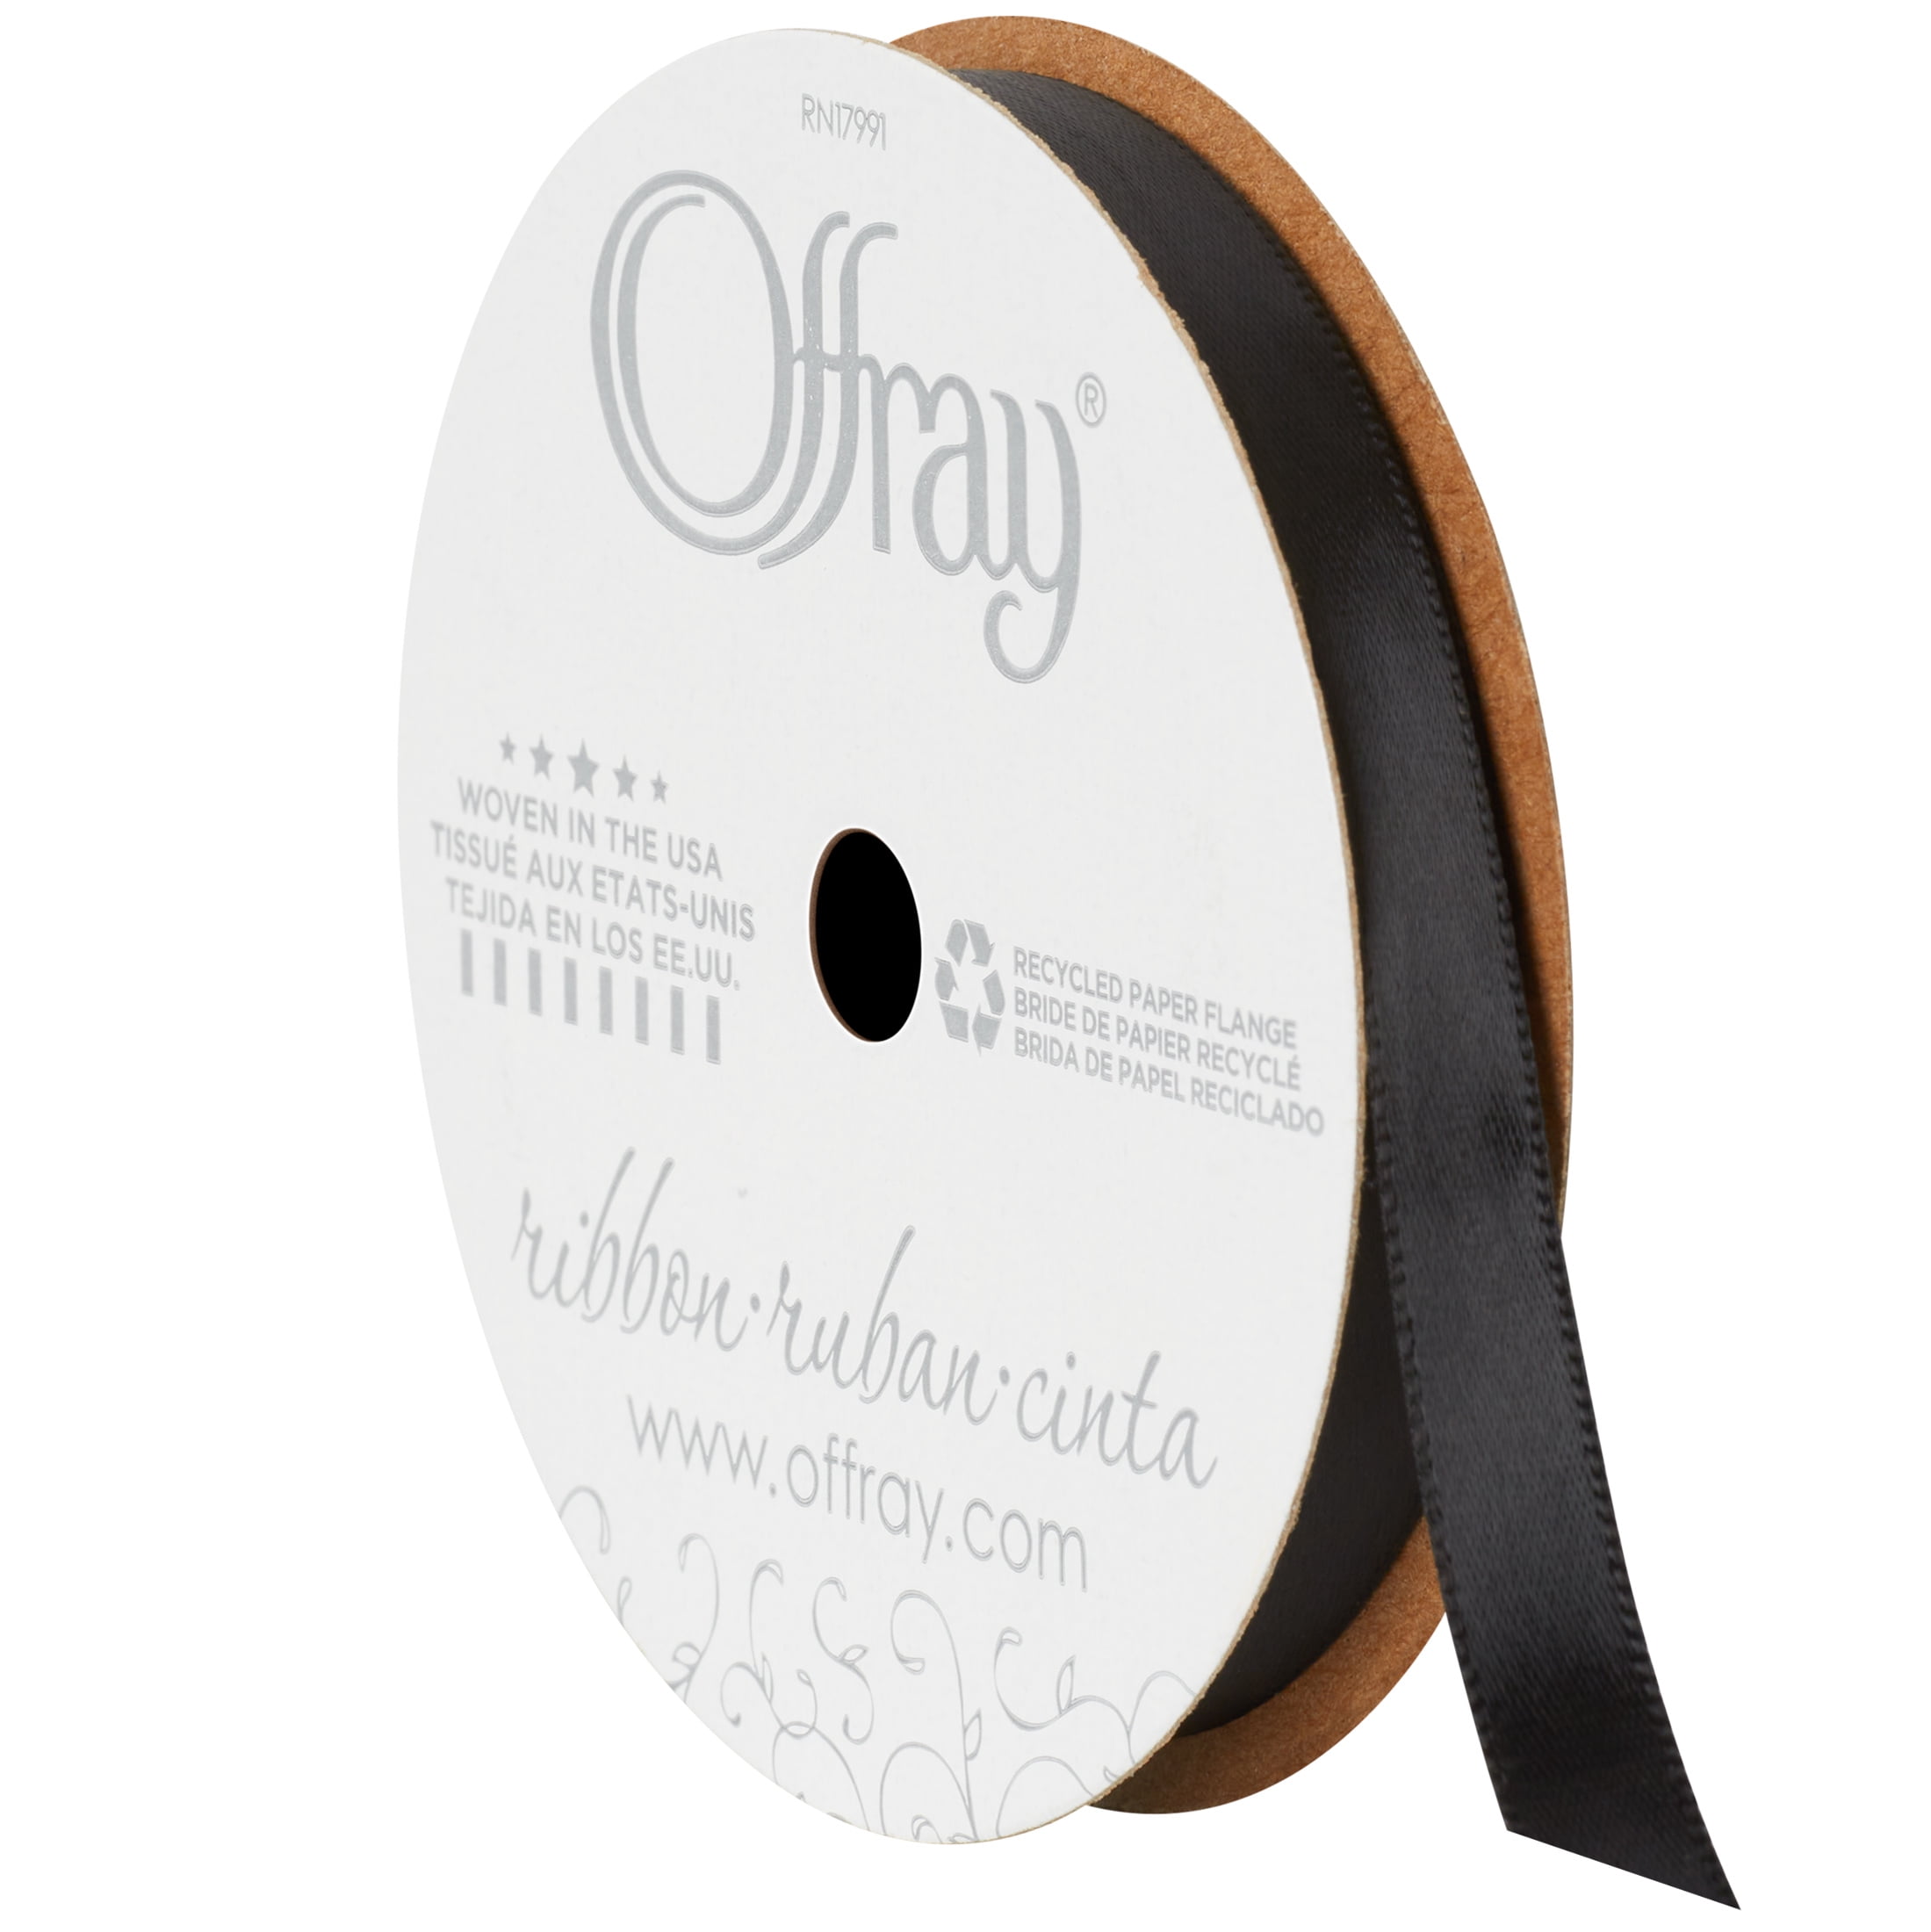 Offray Ribbon, Black 3/8 inch Single Face Satin Polyester Ribbon, 18 feet